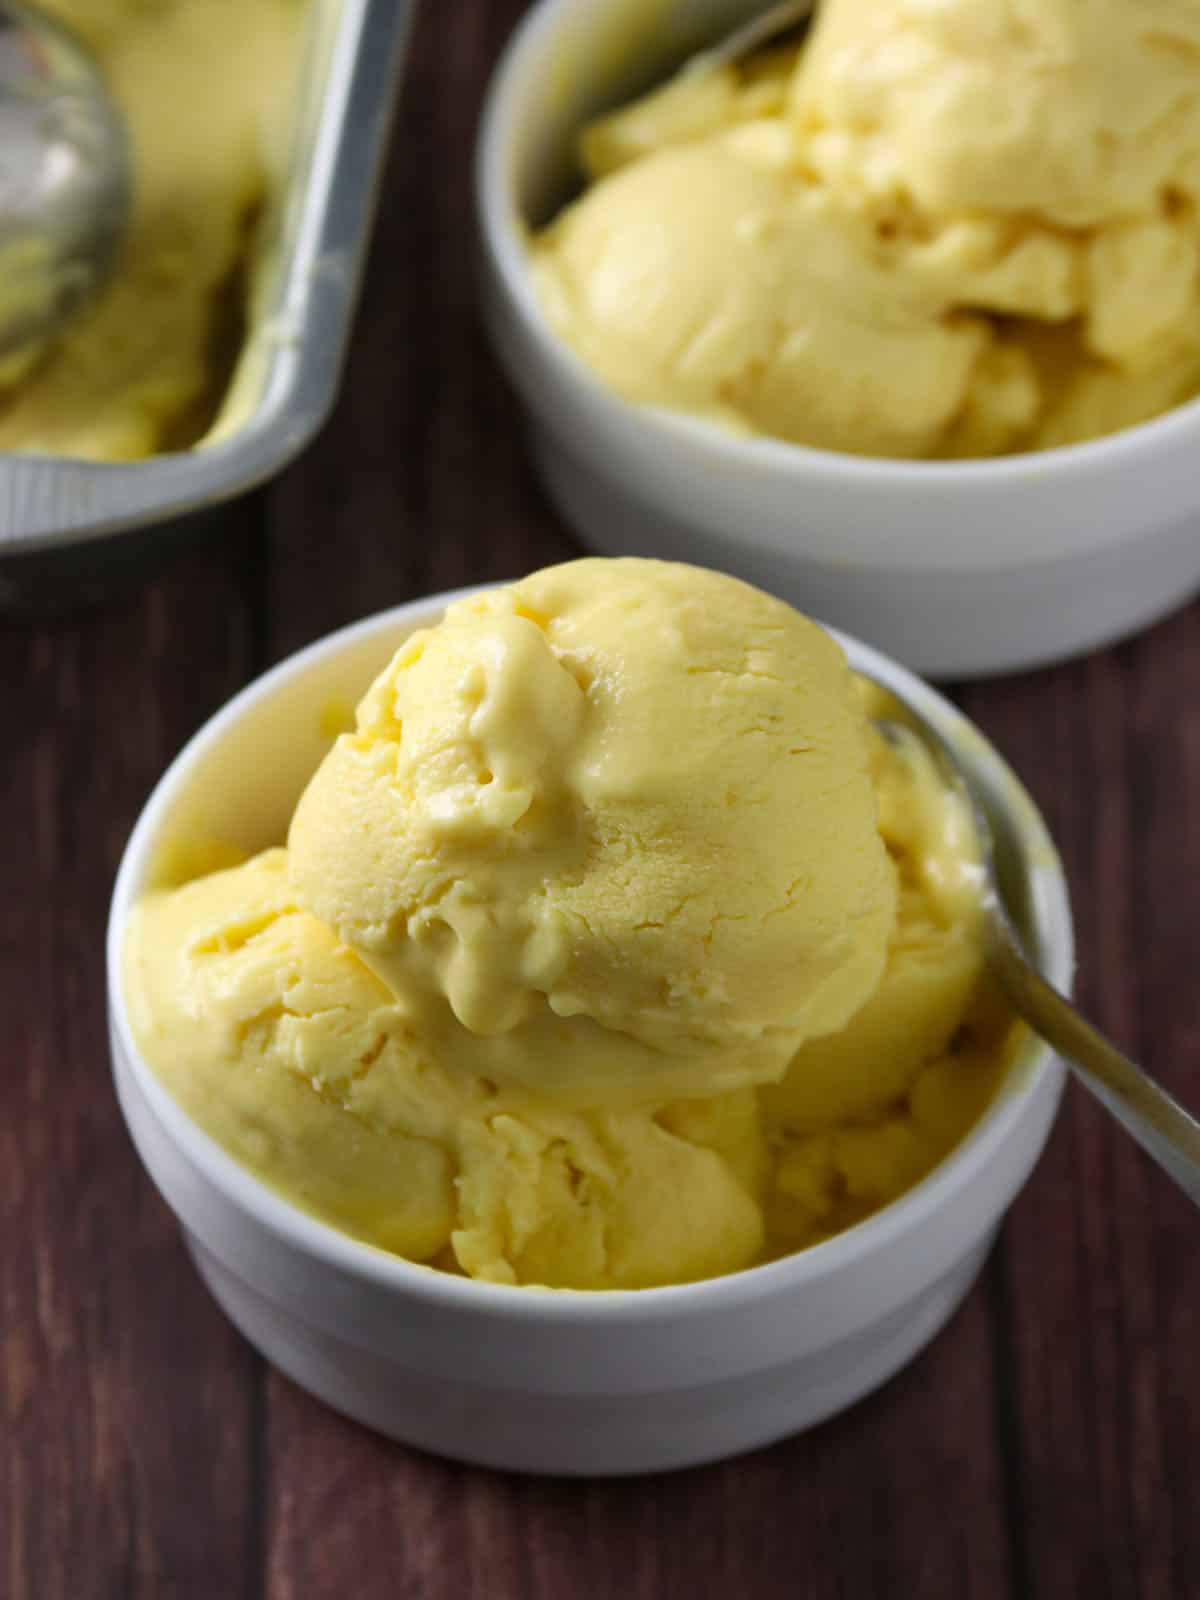 mango ice cream in white serving bowls